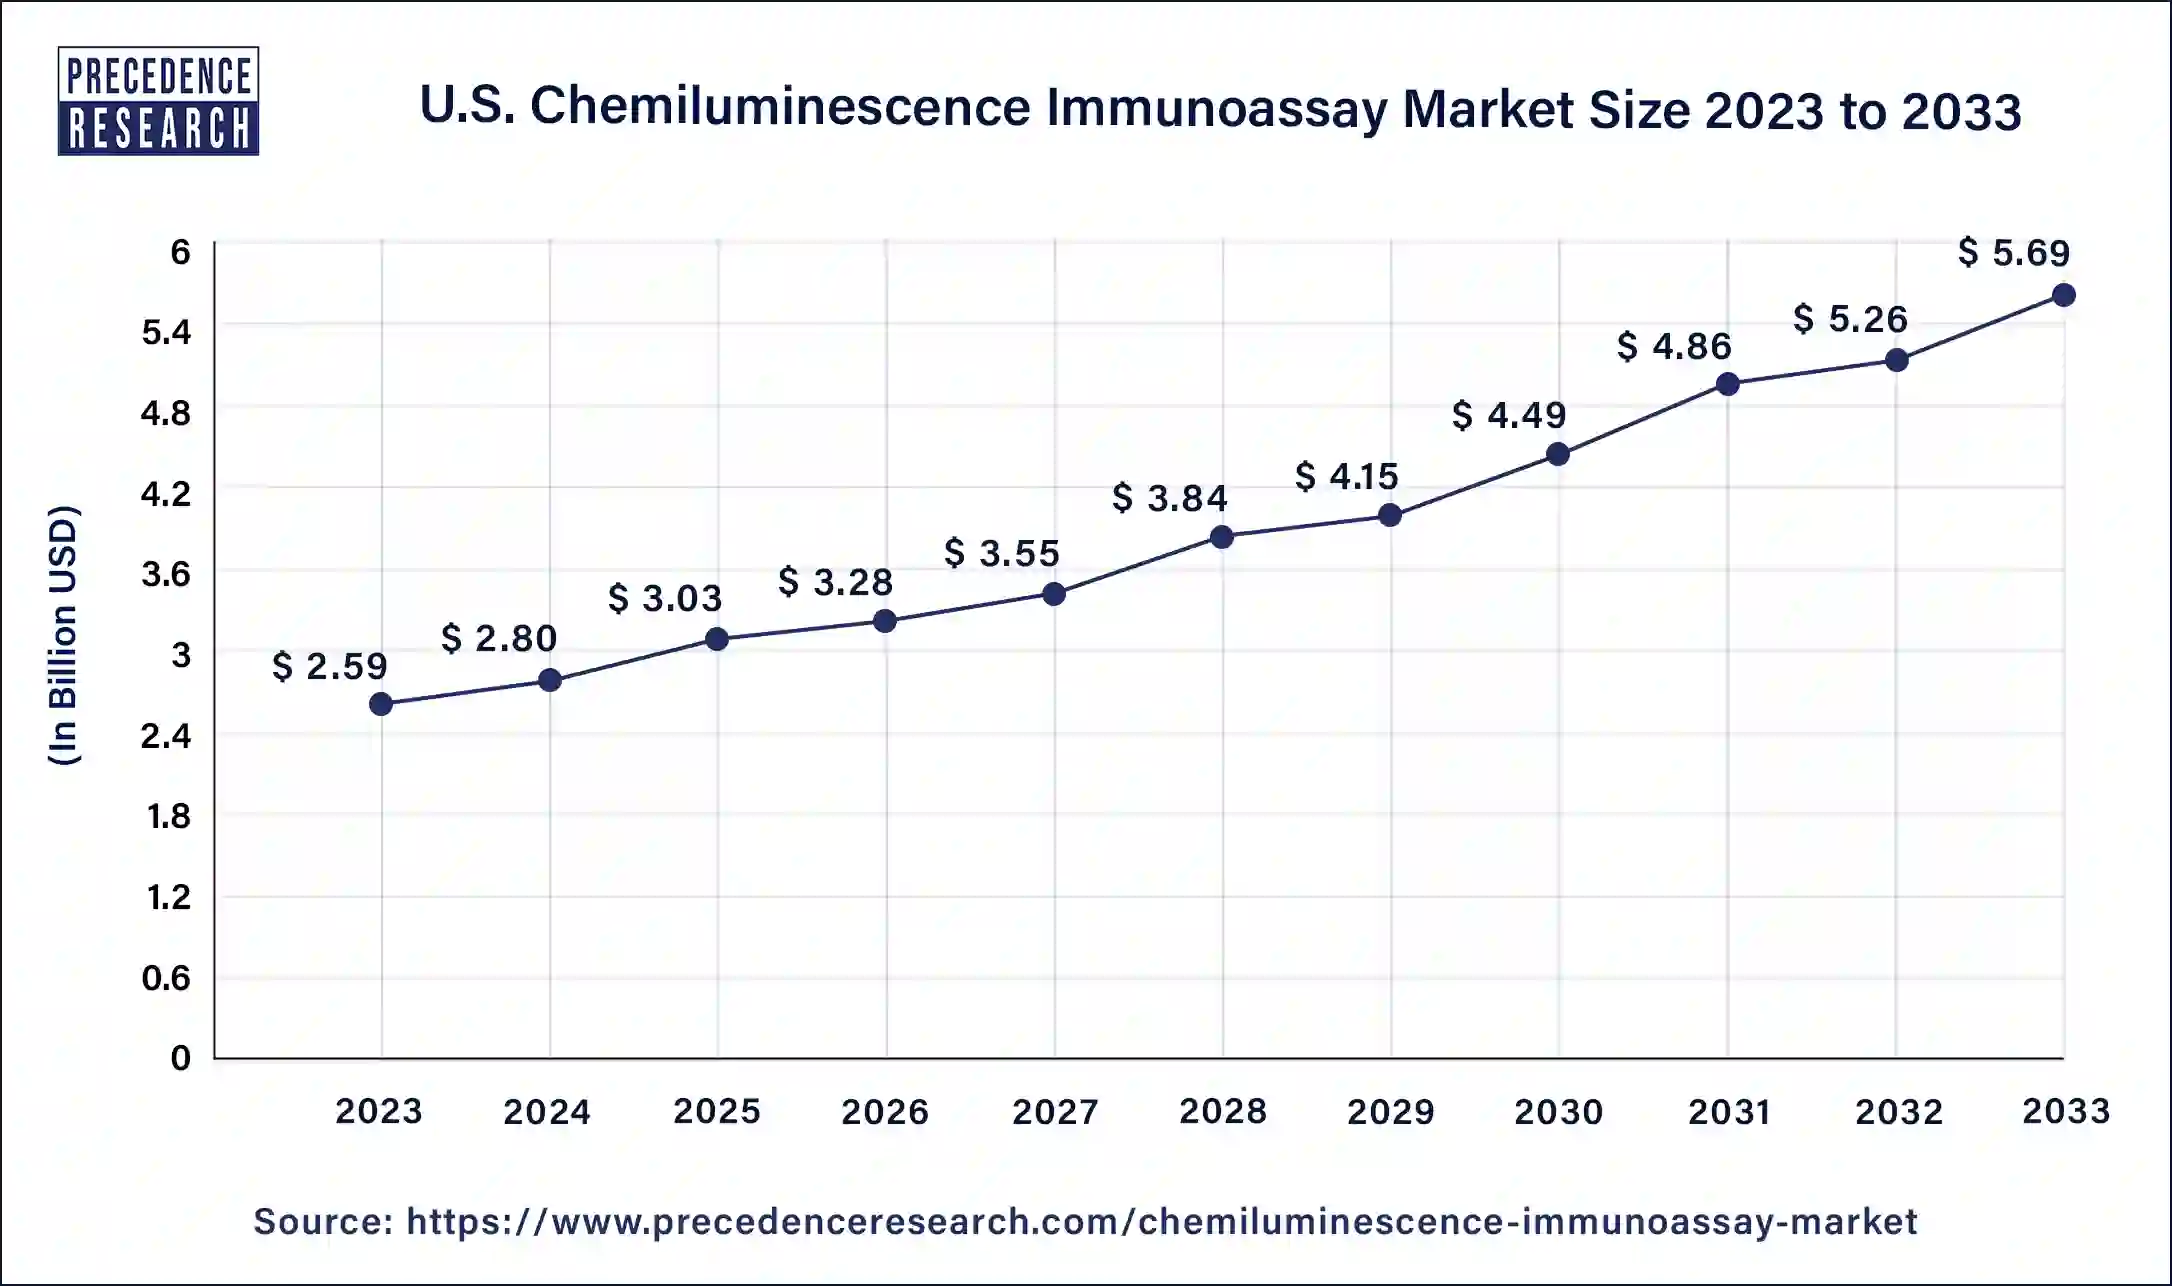 U.S. Chemiluminescence Immunoassay Market Size 2024 to 2033